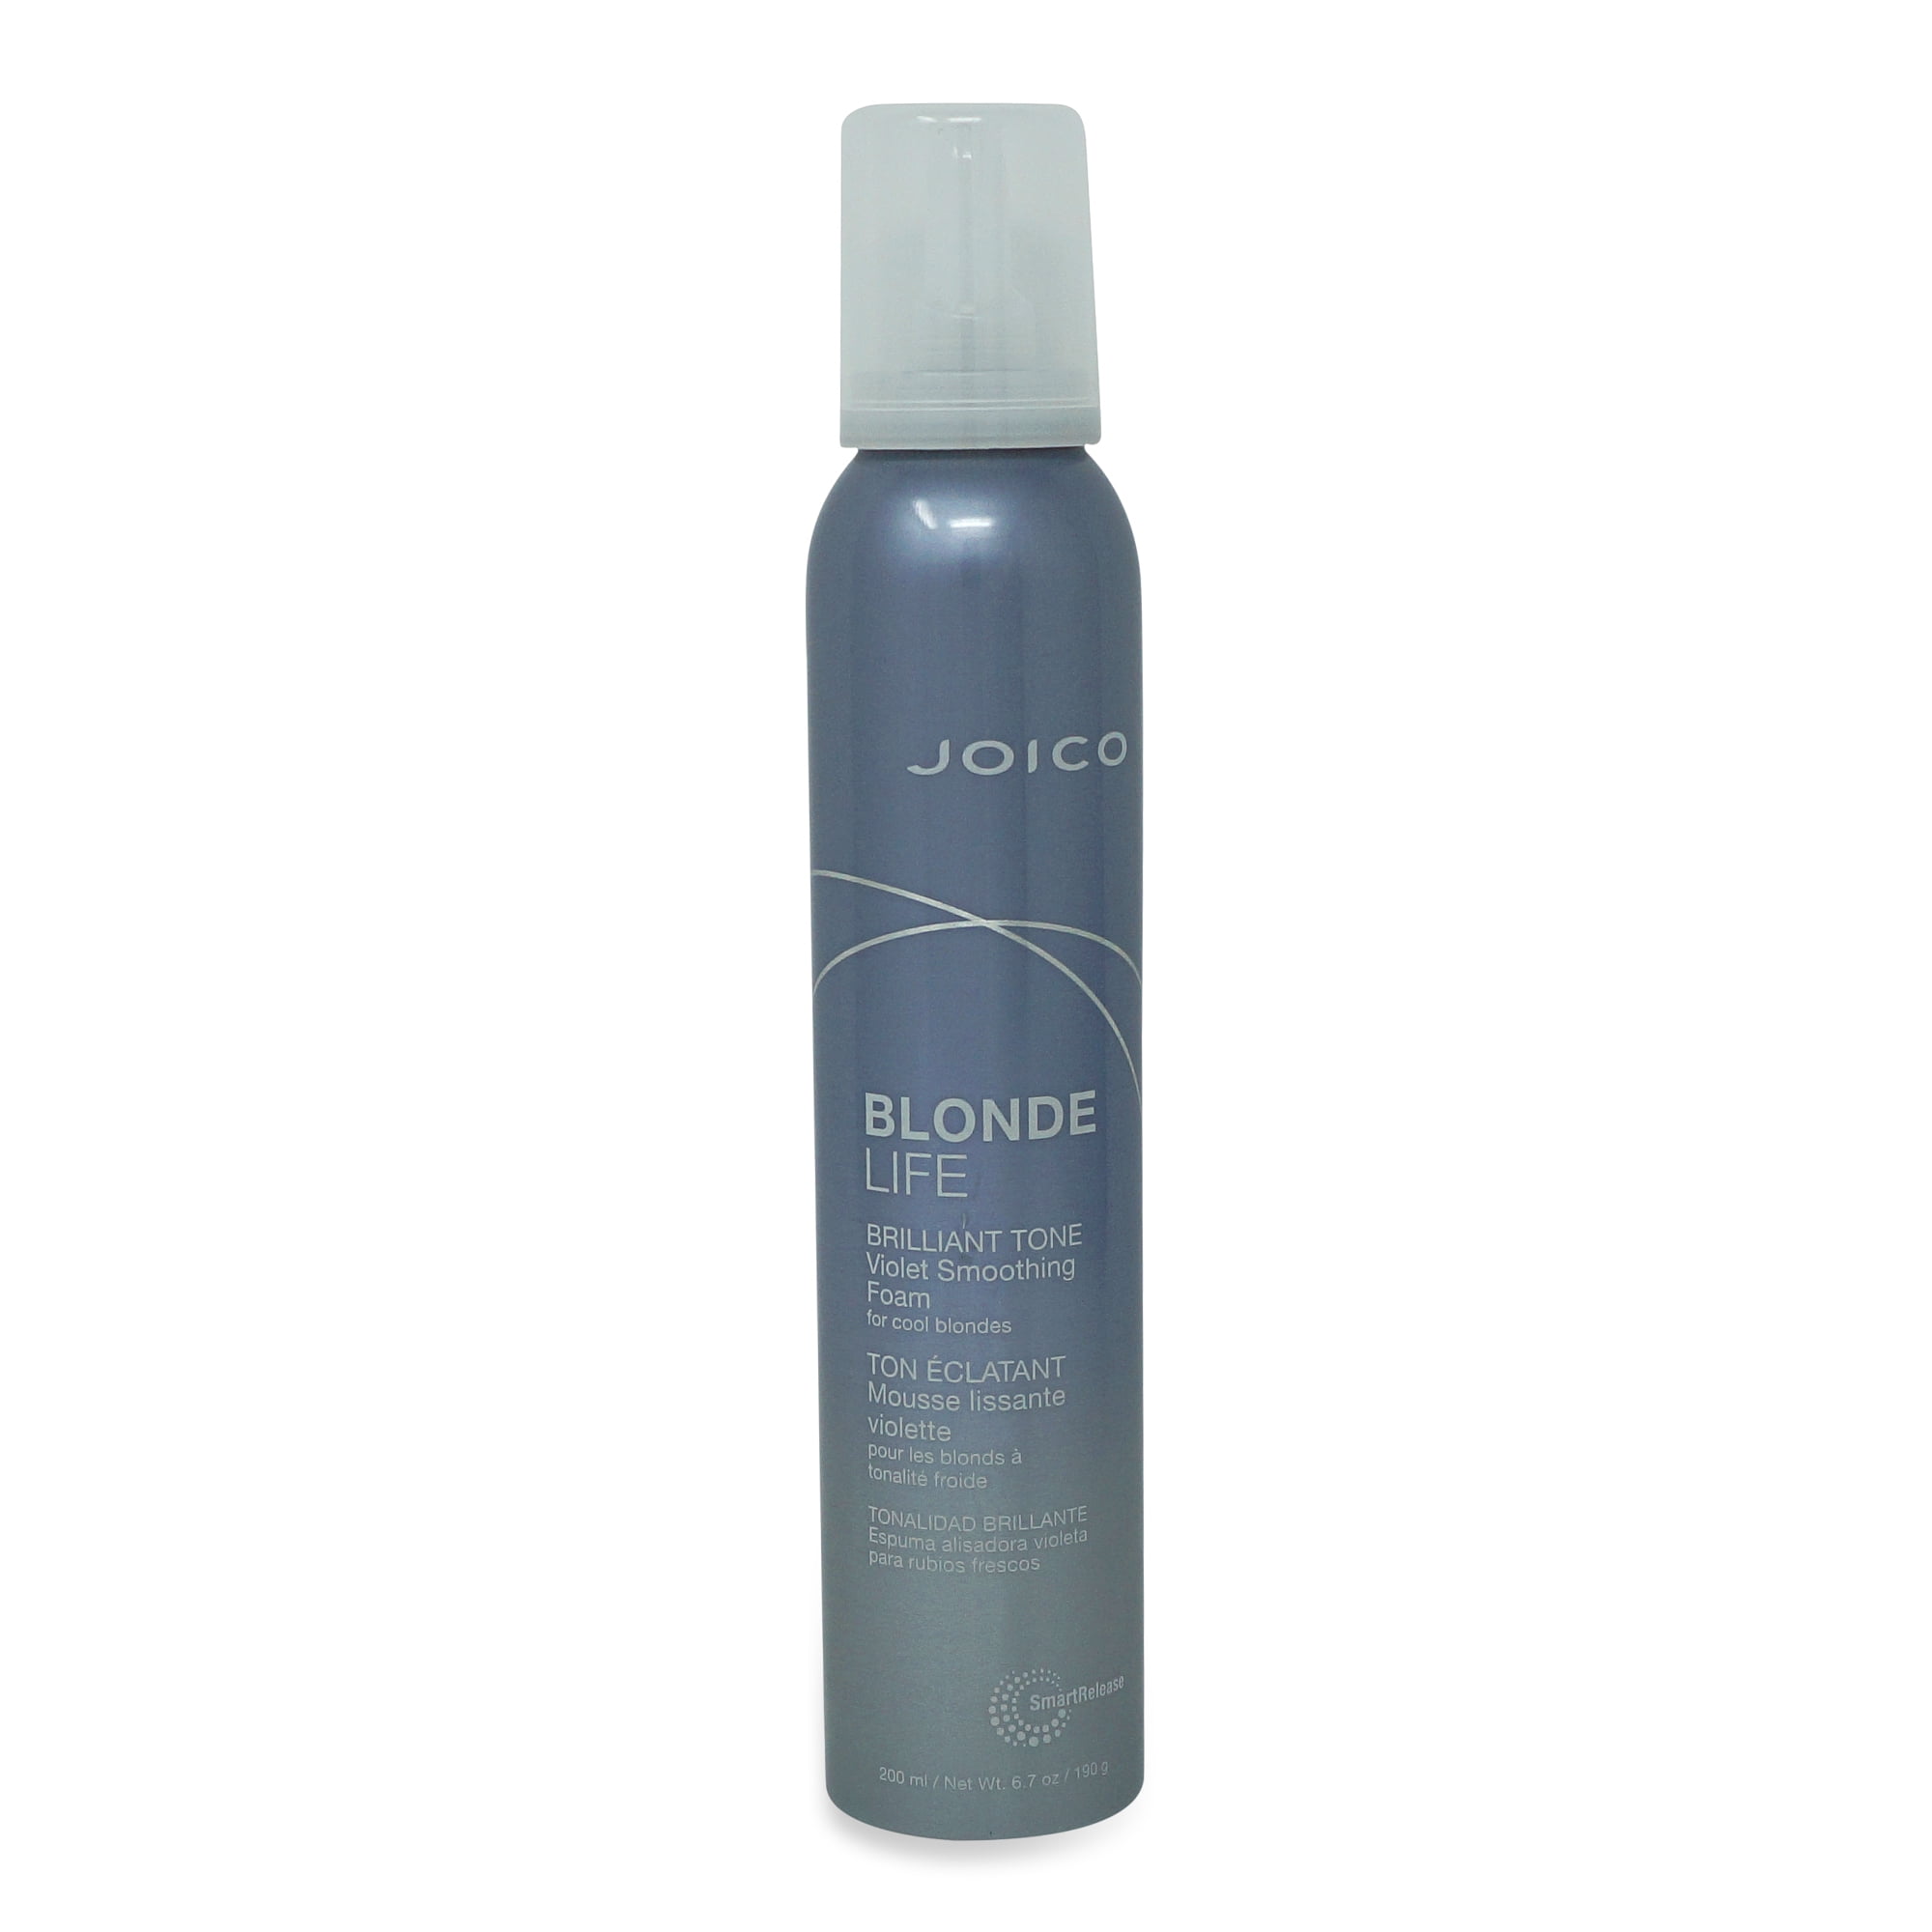 perfume Opinion cure Joico Blonde Life Brilliant Tone Violet Smoothing Foam, 6.7 oz. -  Walmart.com